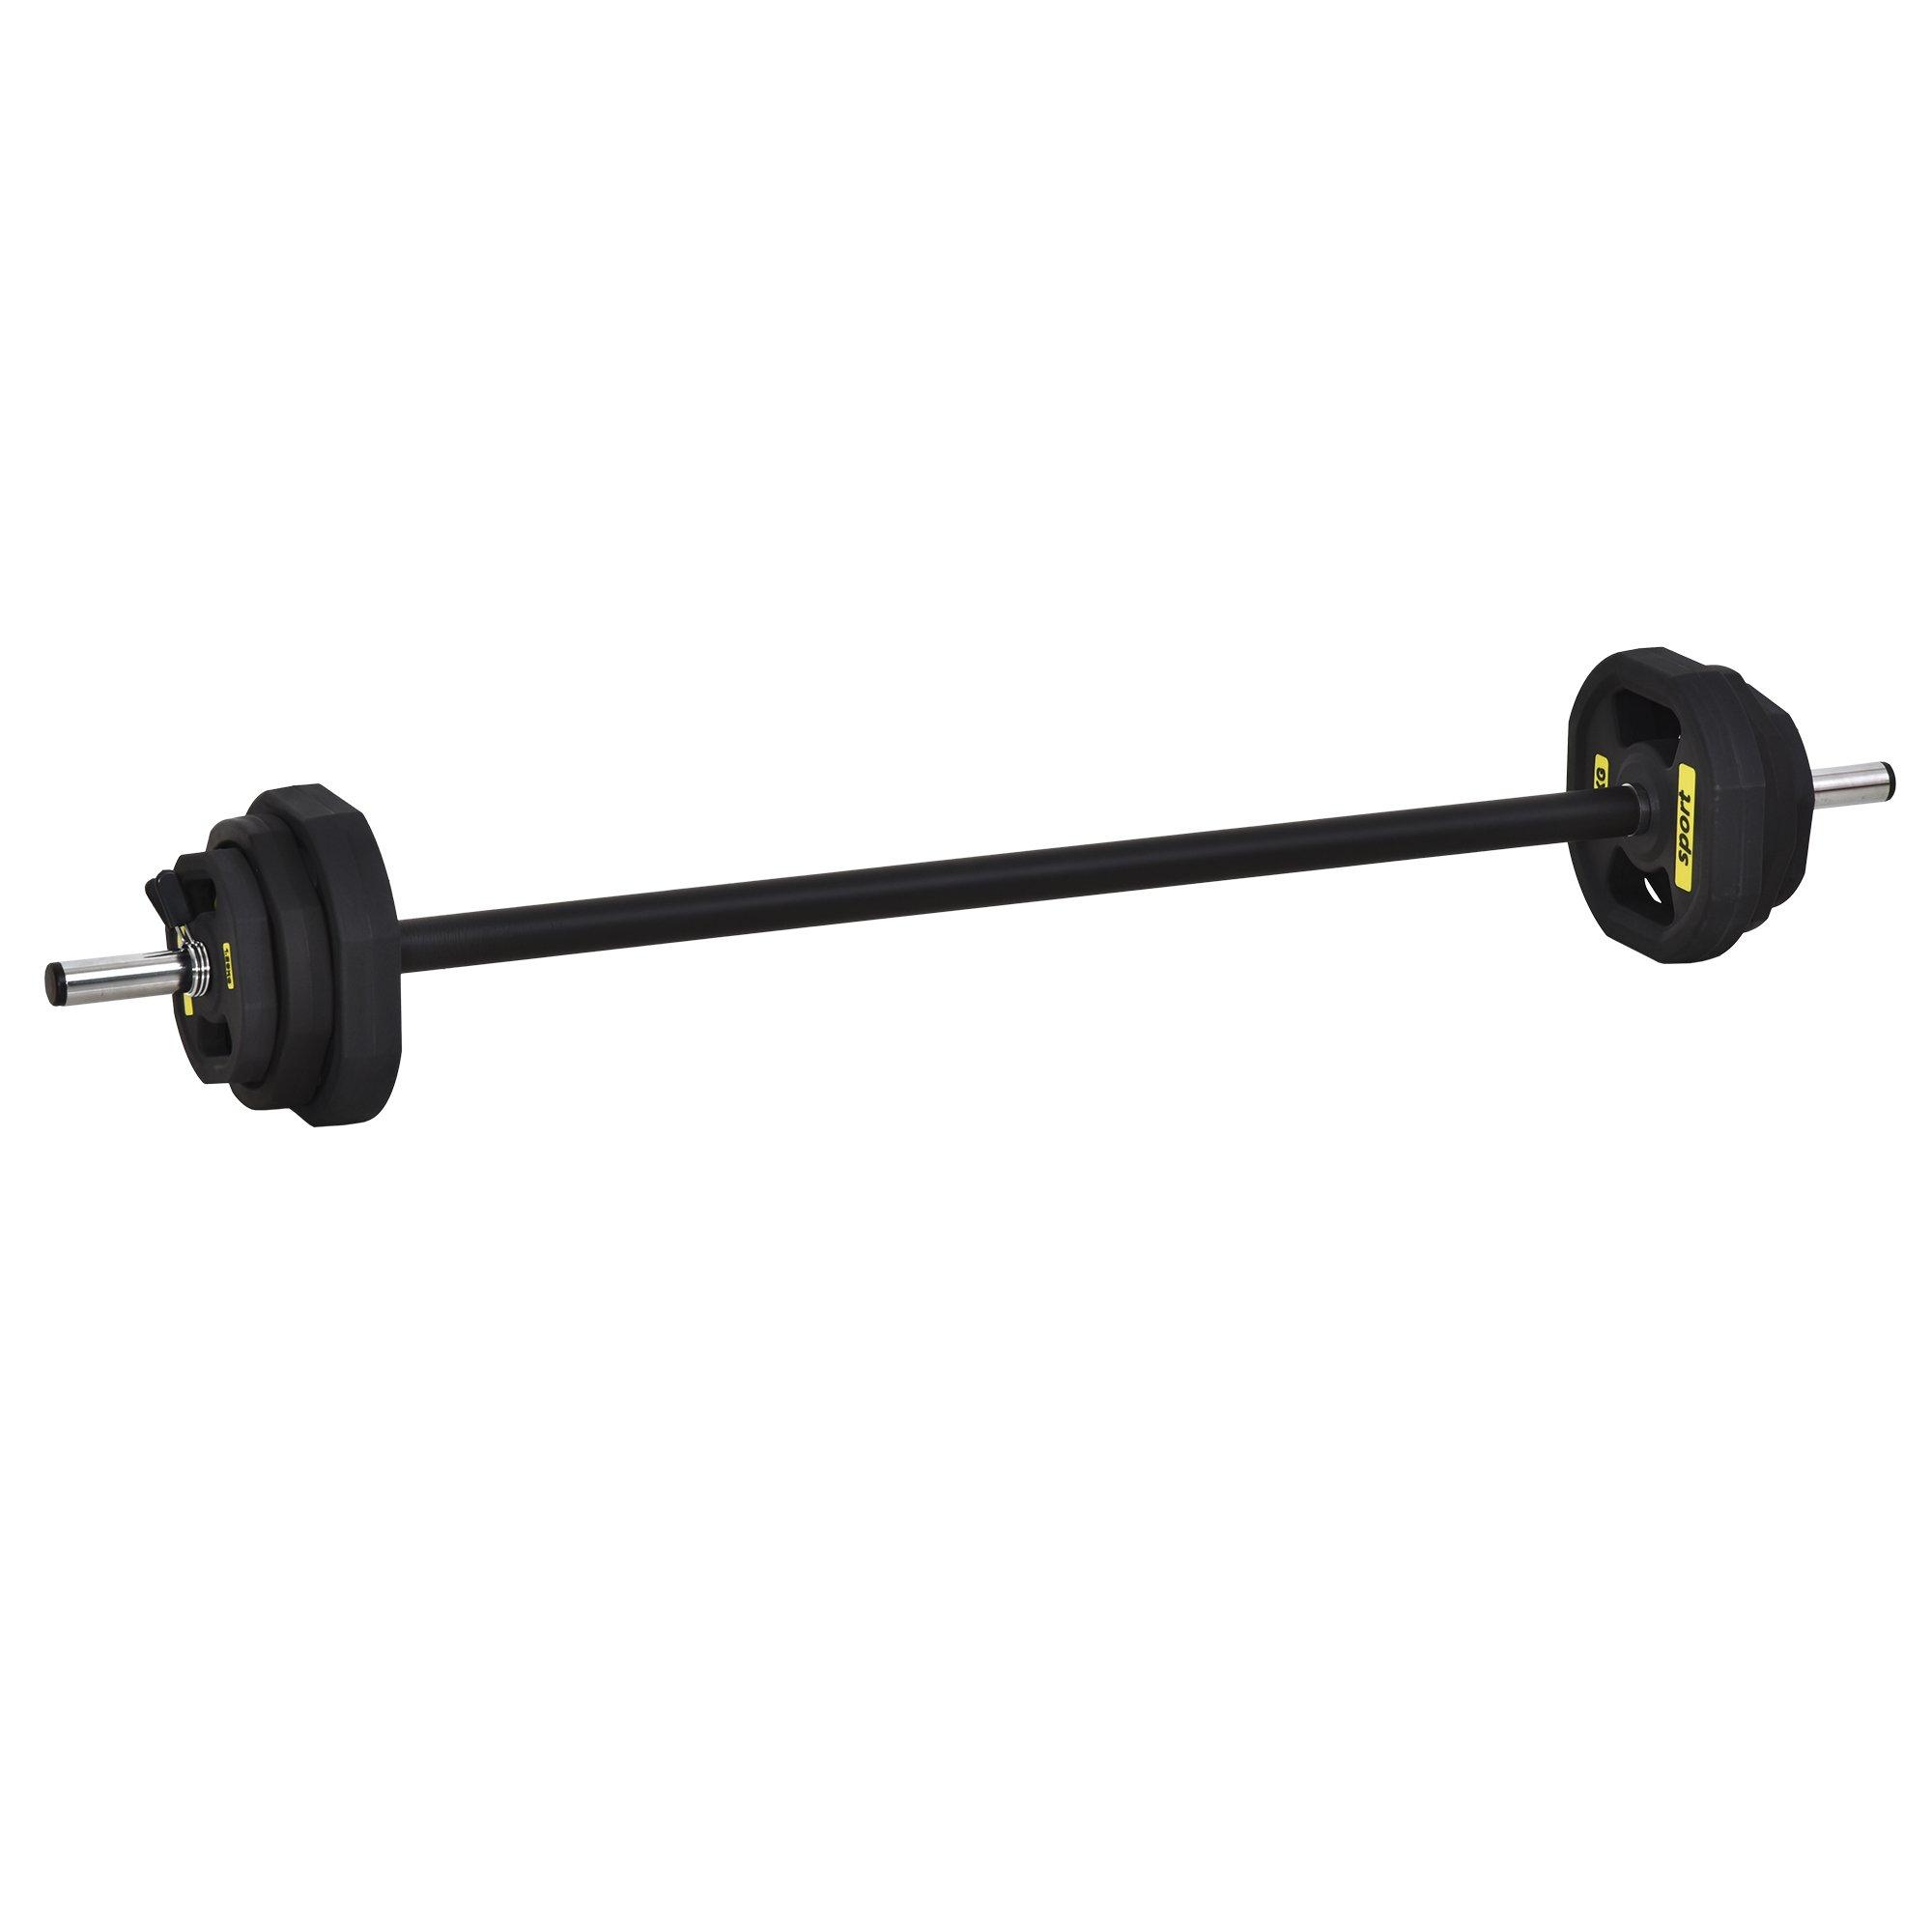 Adjustable 20kg Barbell Set Fitness Exercise for Indoor Home Gym